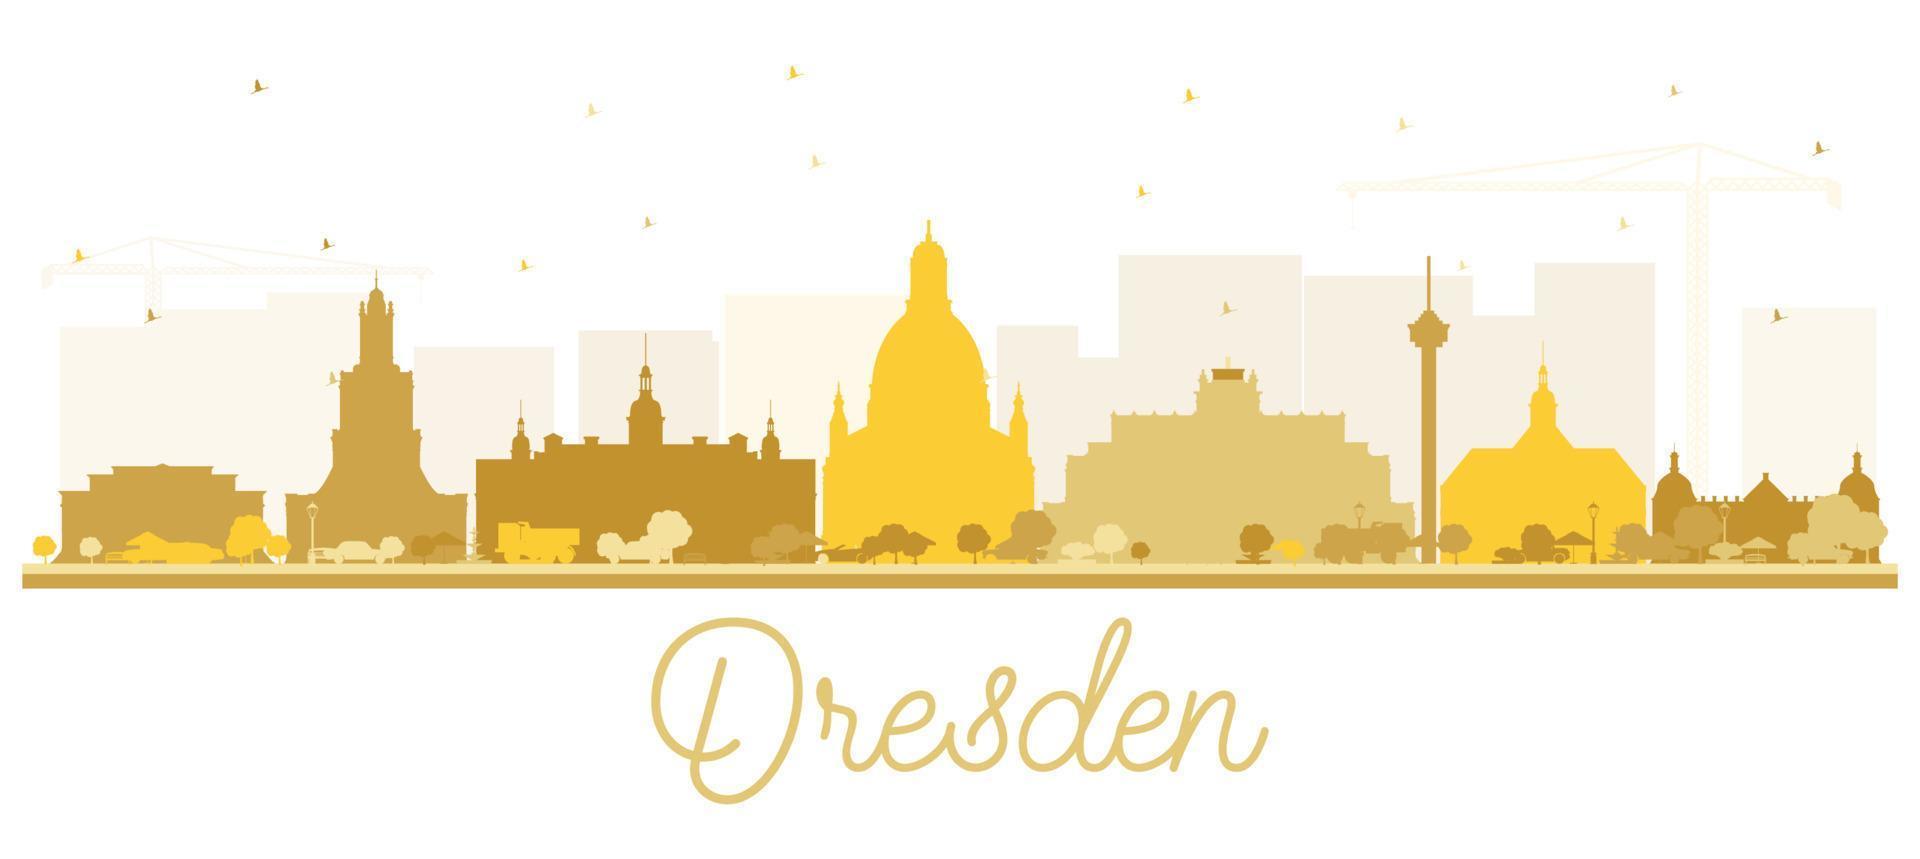 dresden Tyskland stad horisont silhuett med gyllene byggnader isolerat på vit. vektor